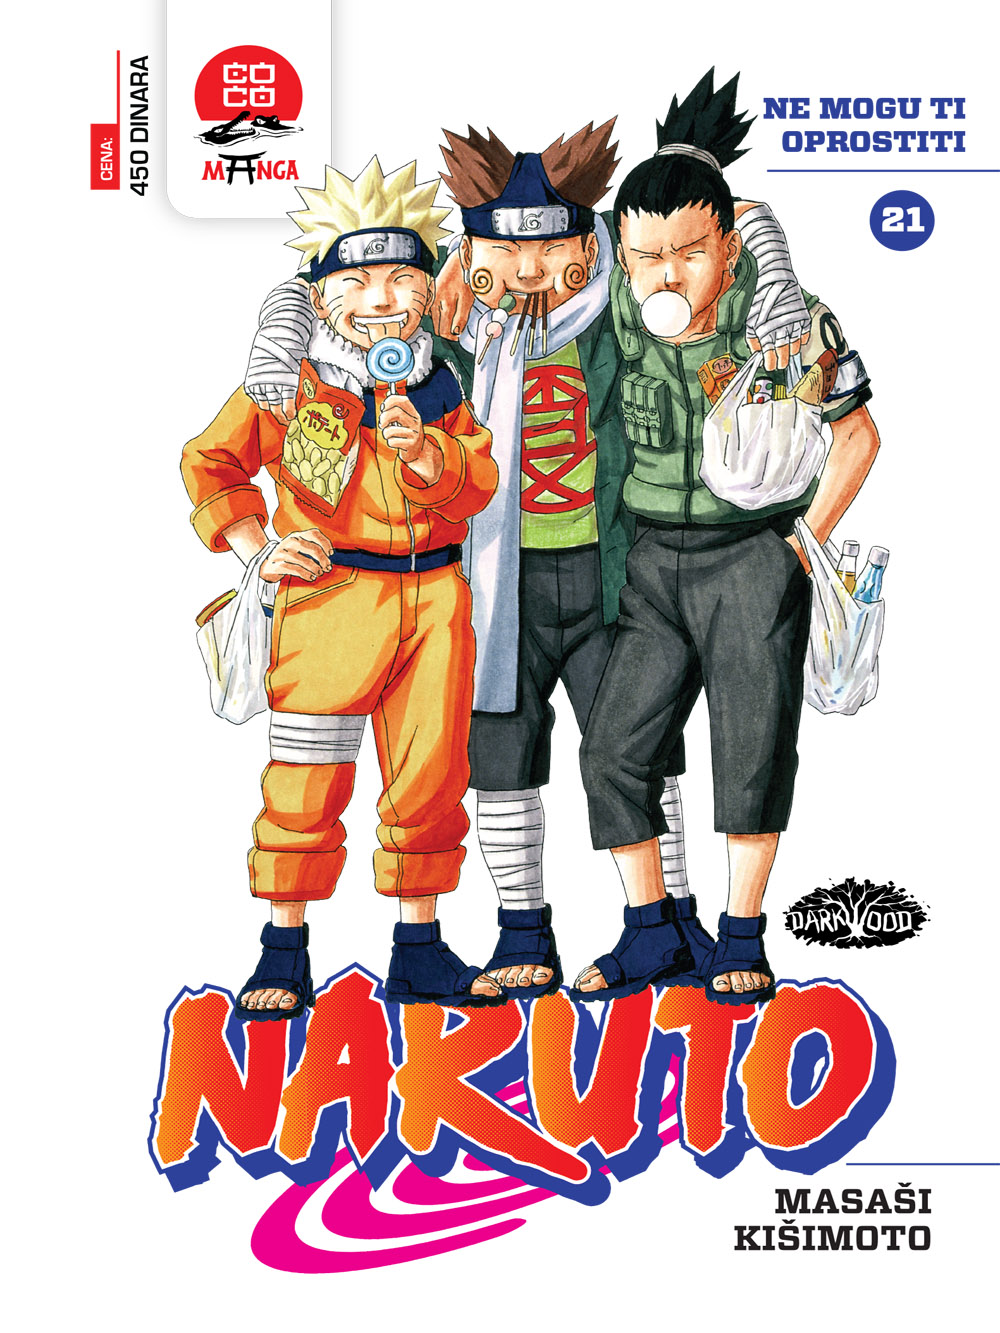 Manga Strip Naruto 21 